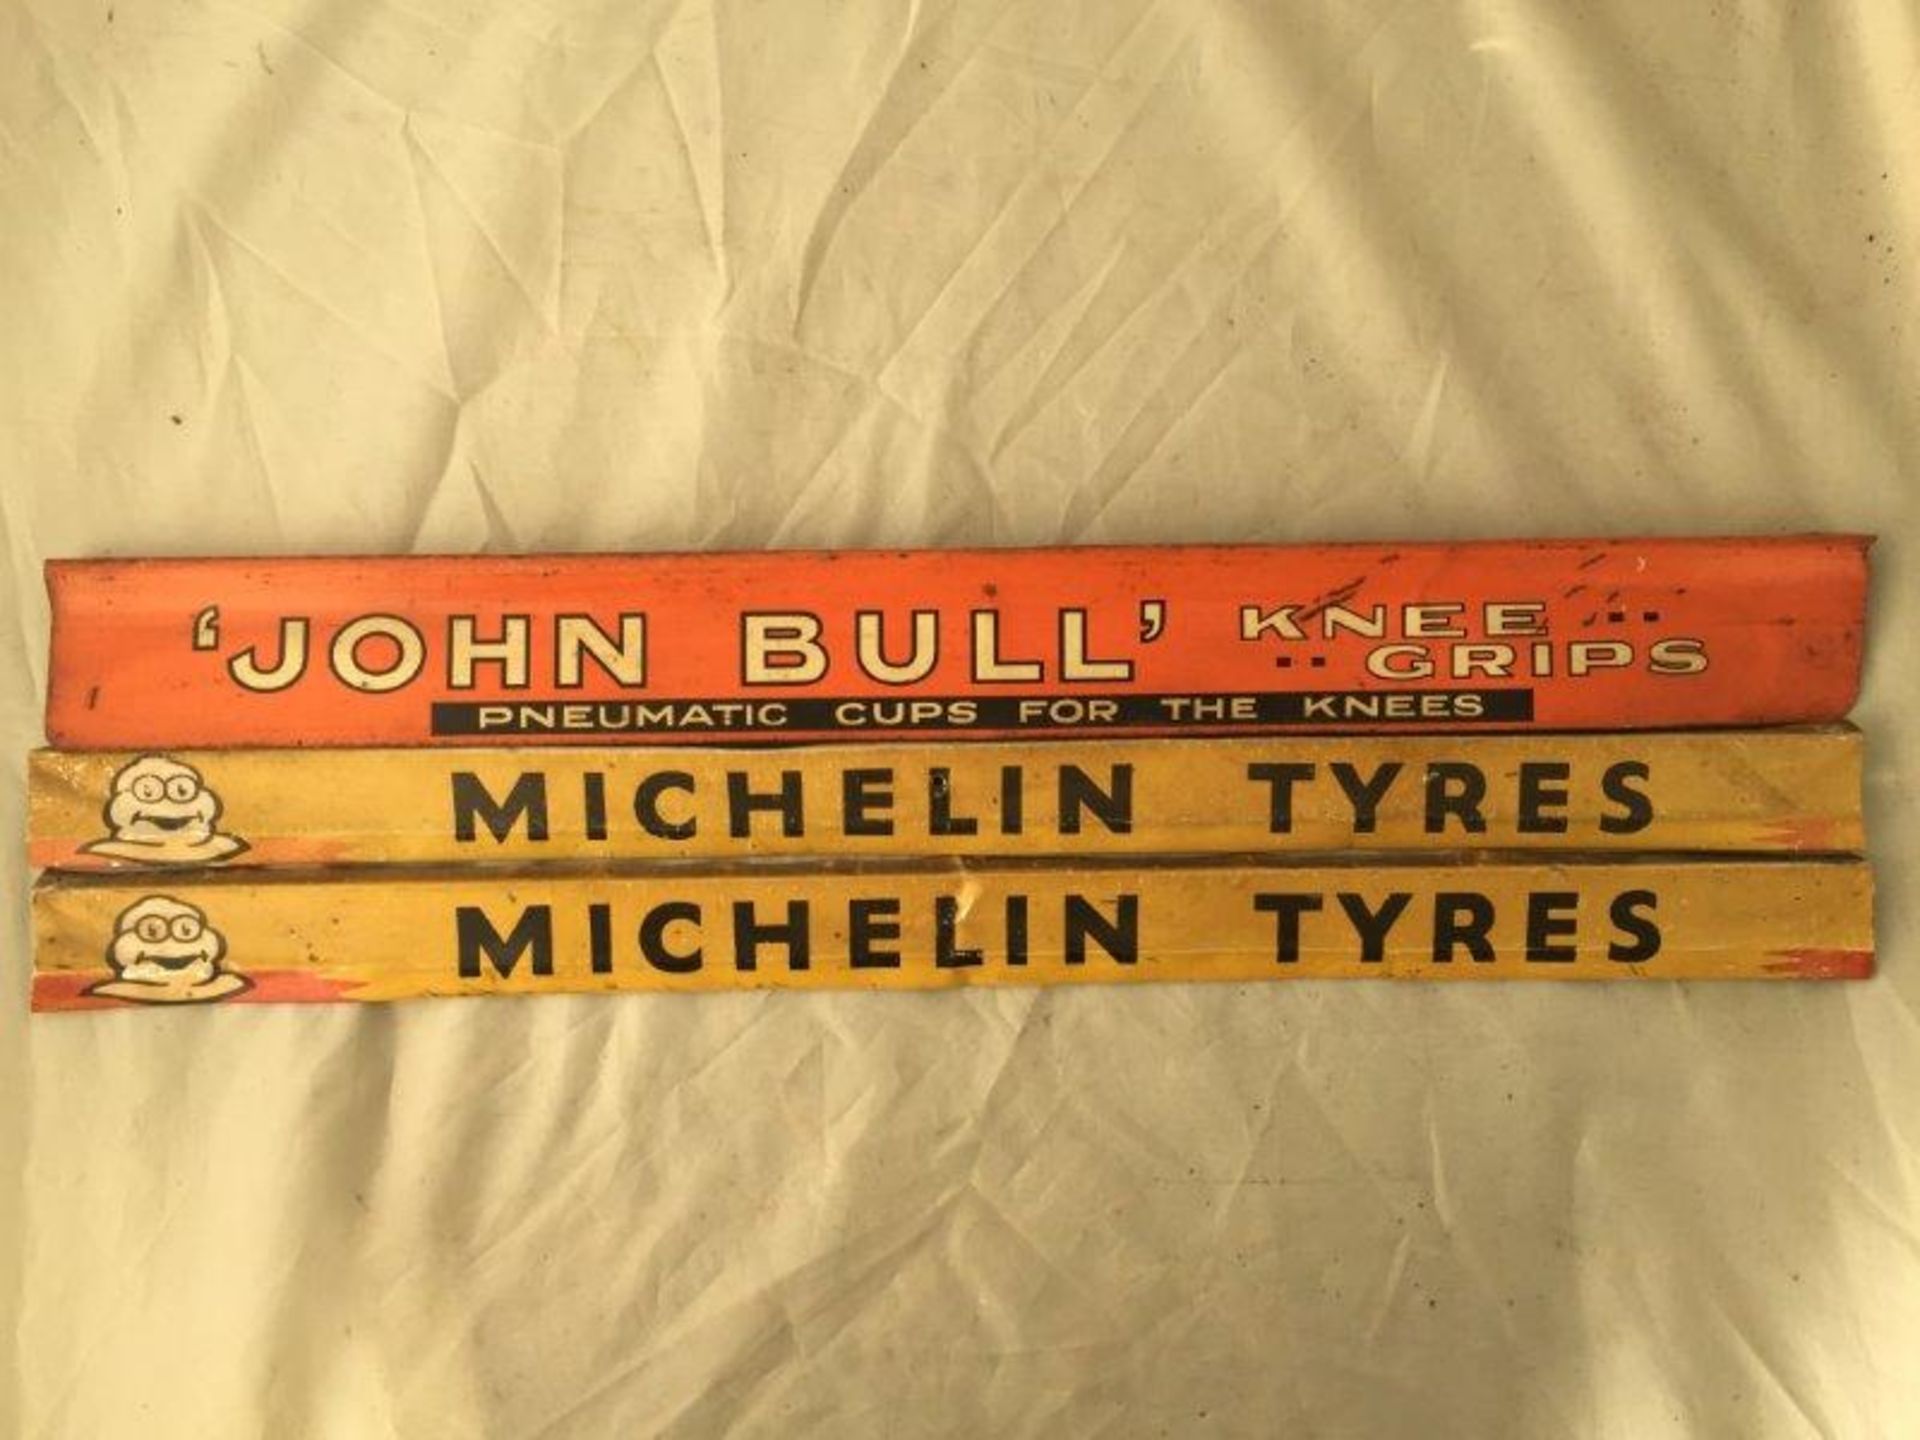 A John Bull knee grips shelf strip and two Michelin Tyres shelf strips.